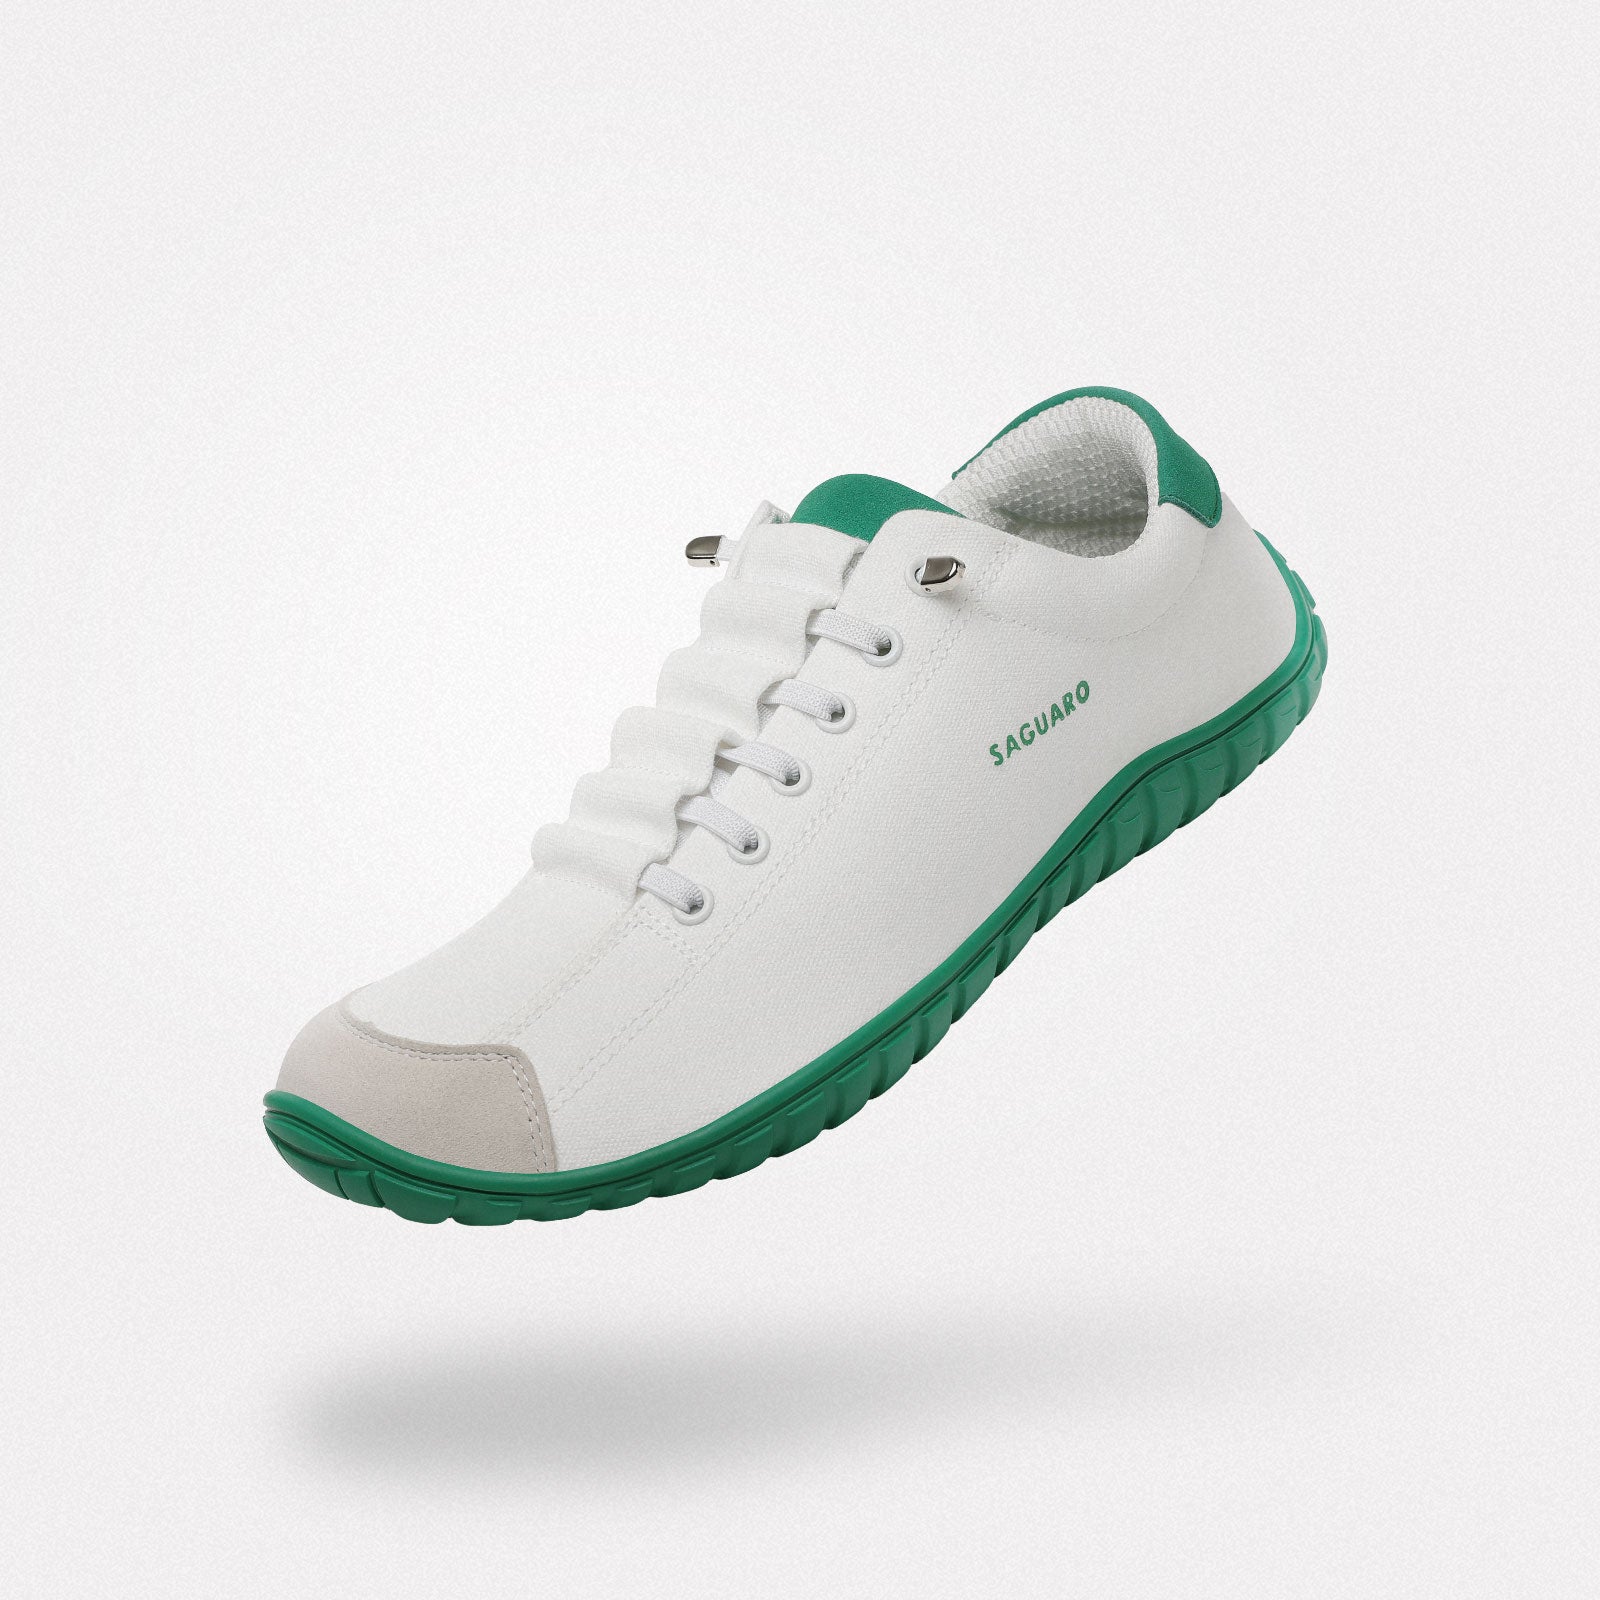 Smart Ⅰ - Barefoot Shoes - Keep Unrestrained - SAGUARO® – Saguaro Barefoot  Shoes